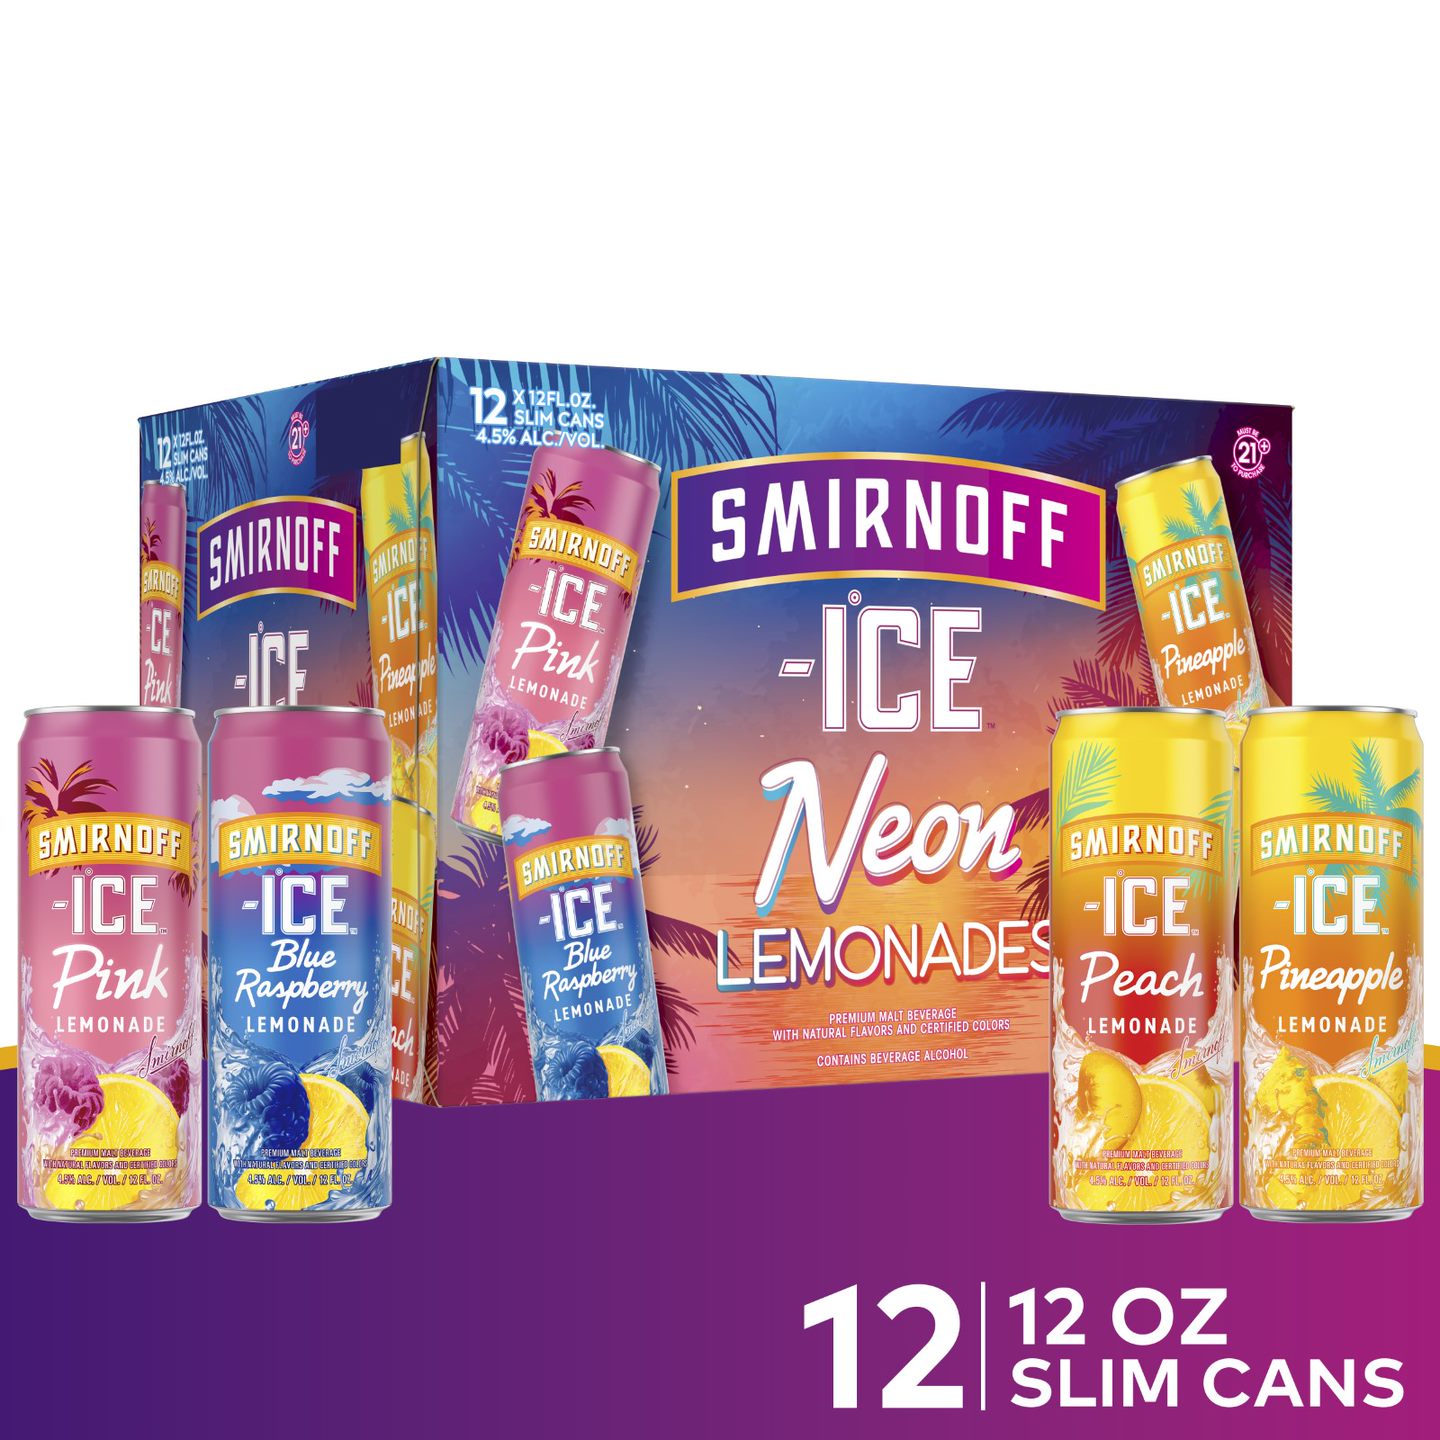 Smirnoff, Smirnoff Ice Neon Lemonades, 12 Pack Variety